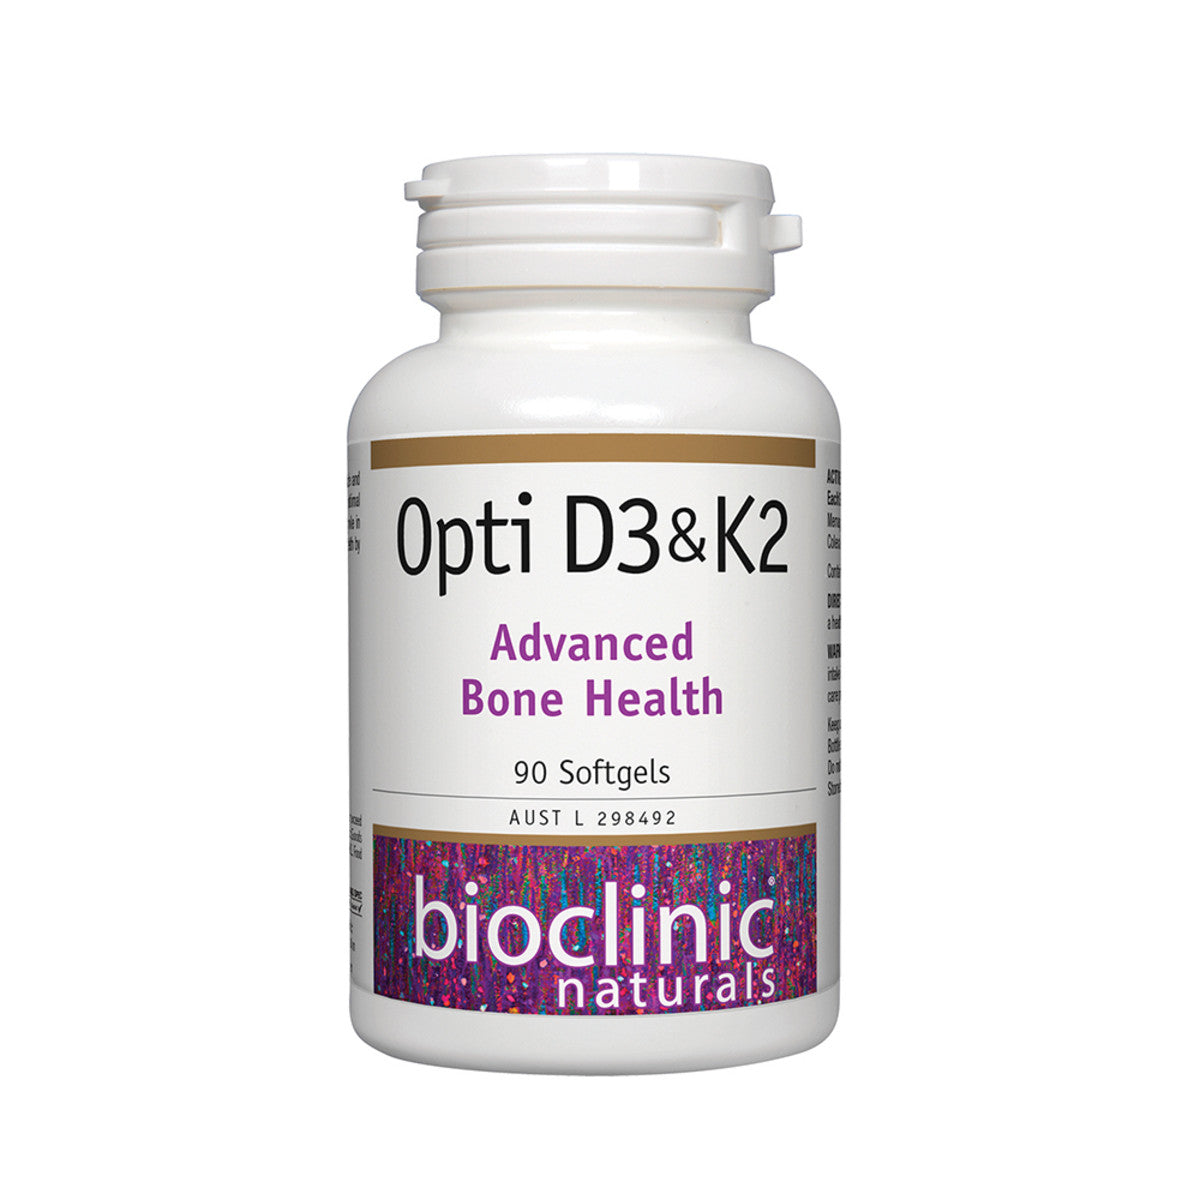 Bioclinic Naturals - Opti D3 and K2